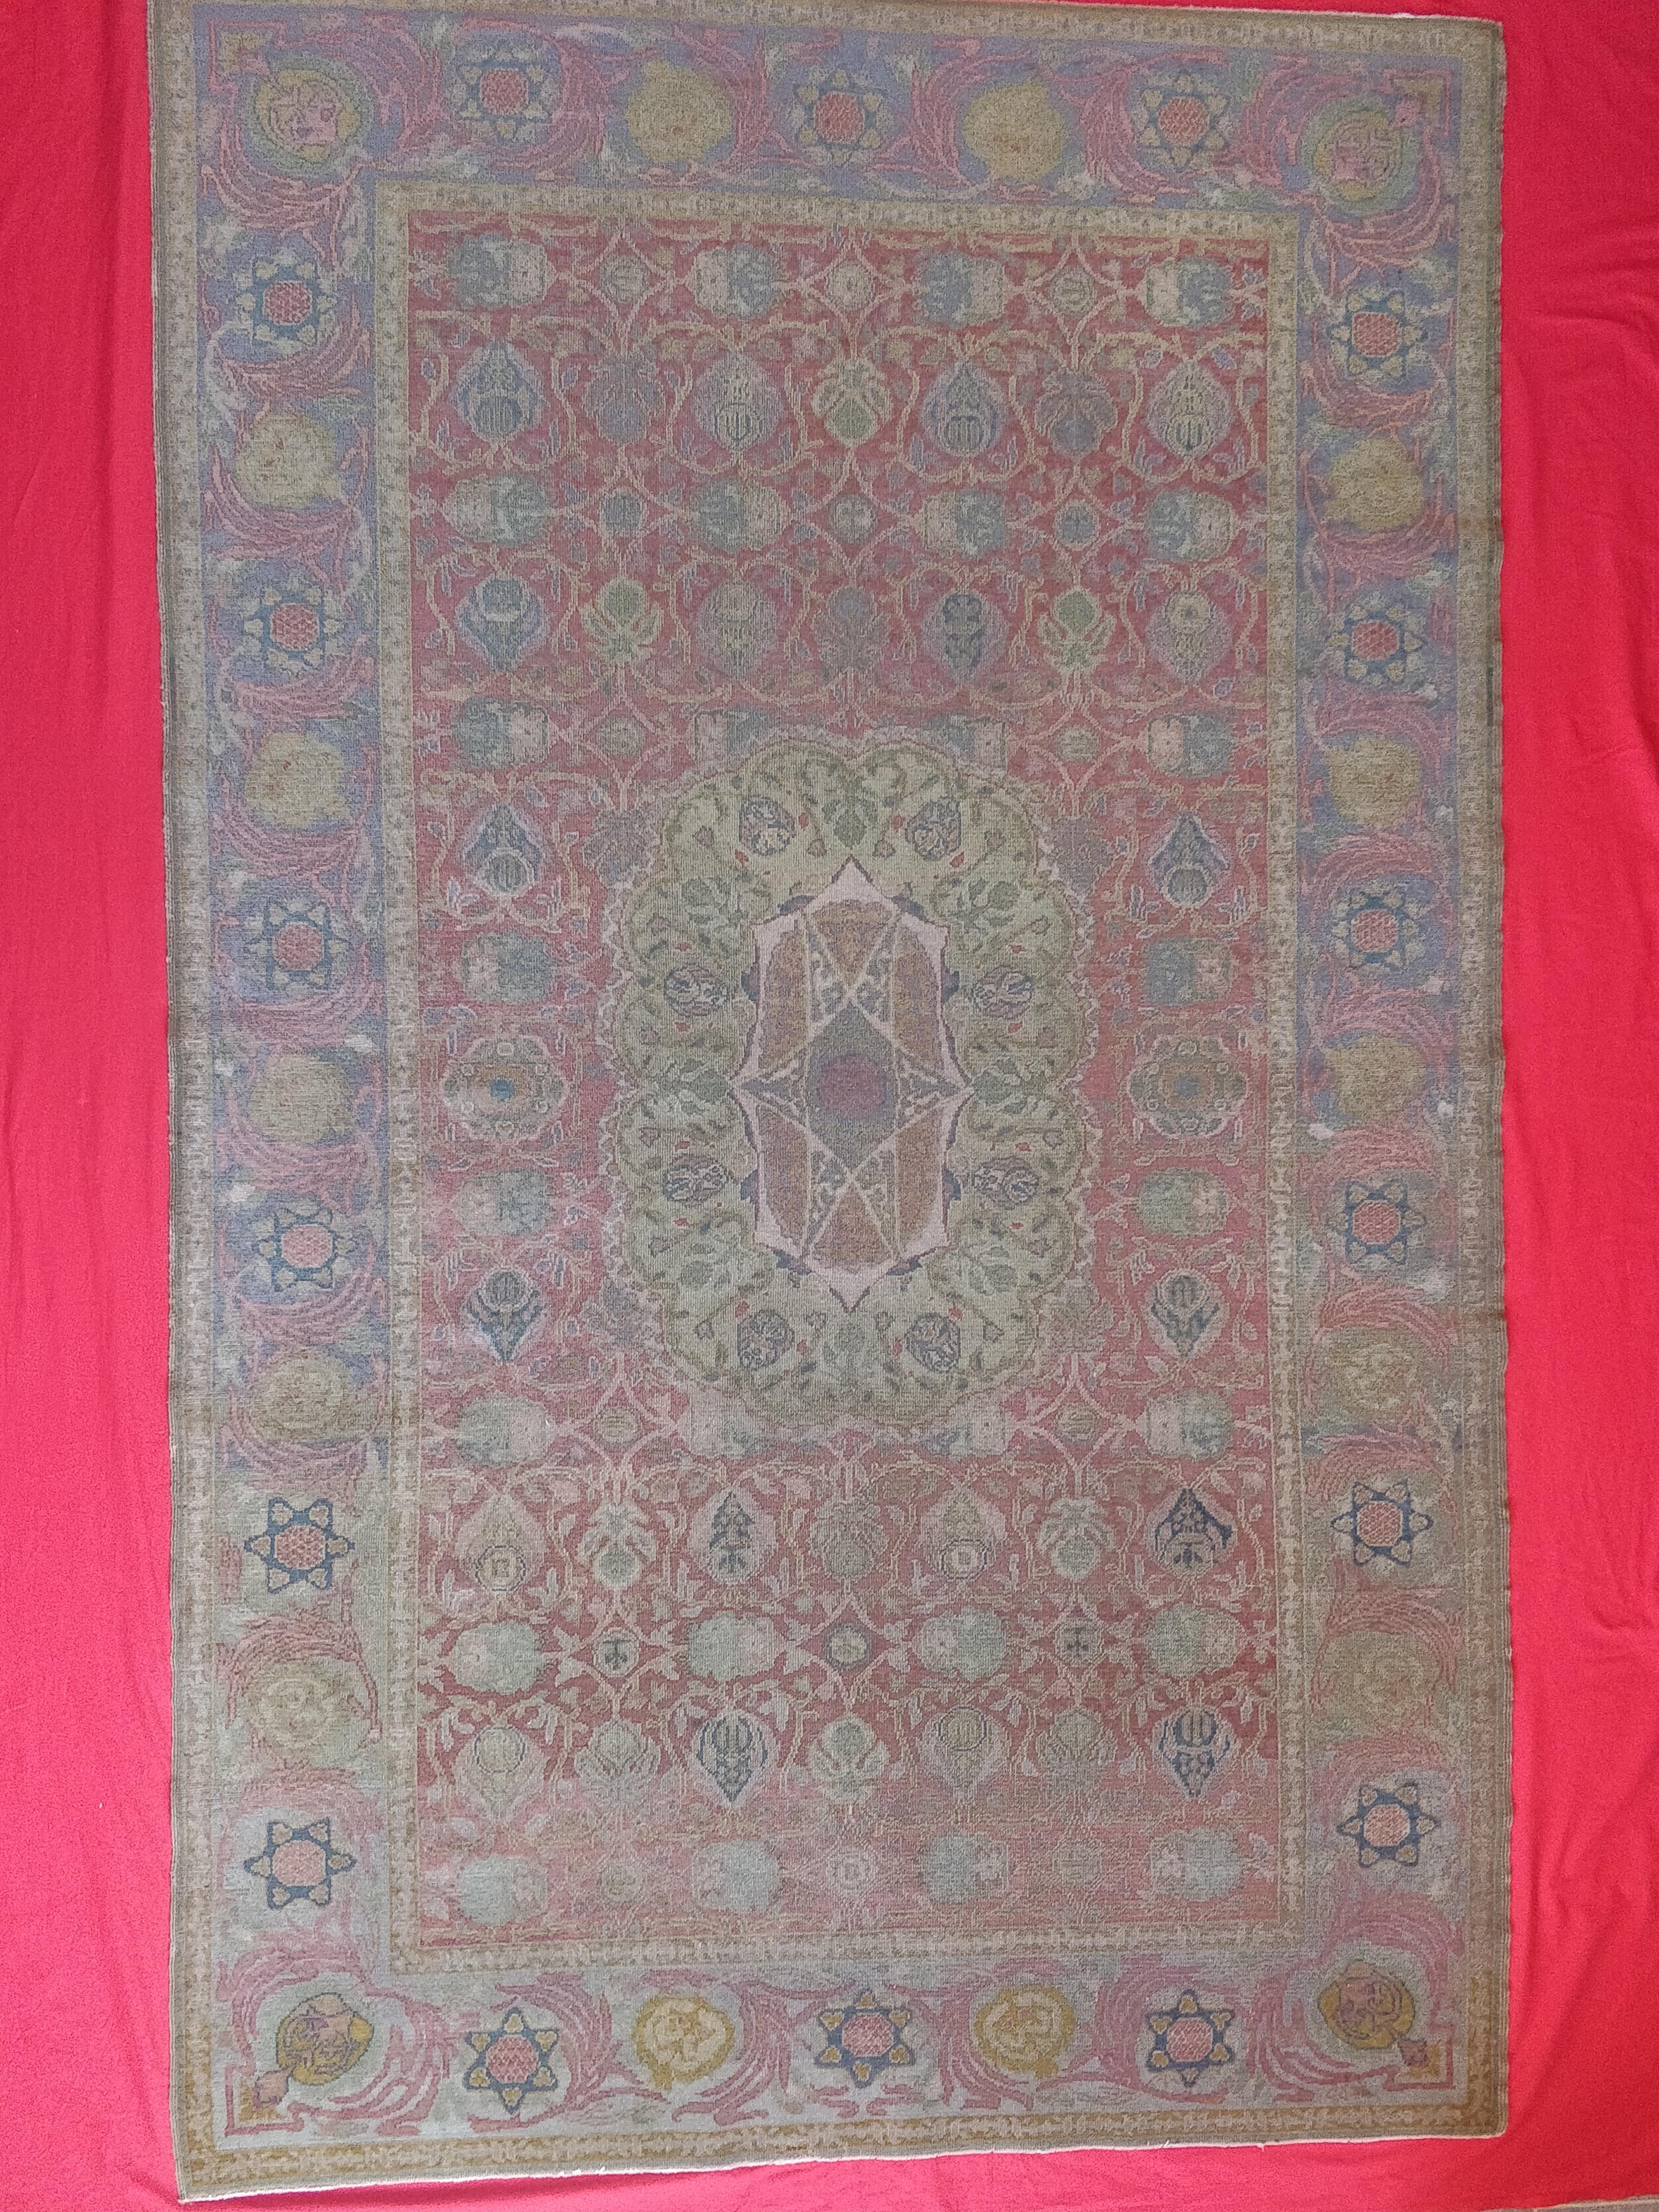 Israeli Antique Israel Bezalel Carpet with Judaica Symbols For Sale